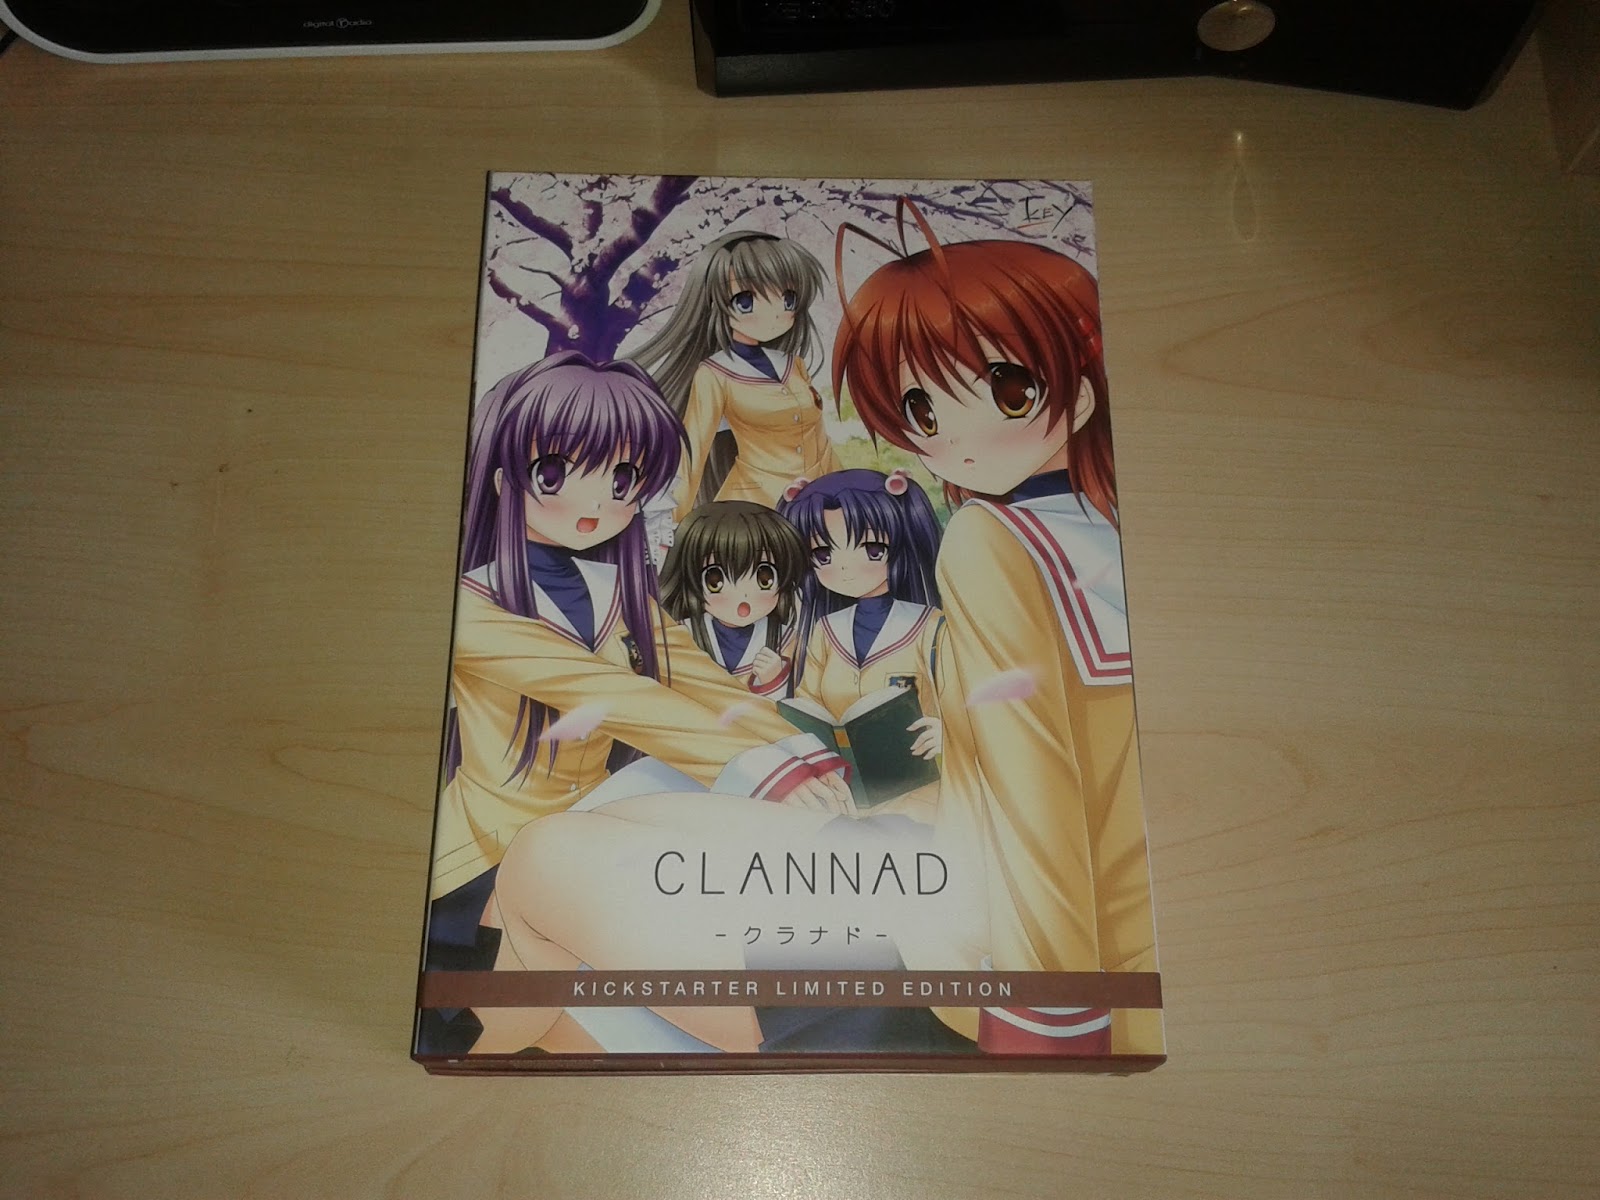 Sekai Project Announces Acquisition of Clannad Visual Novel